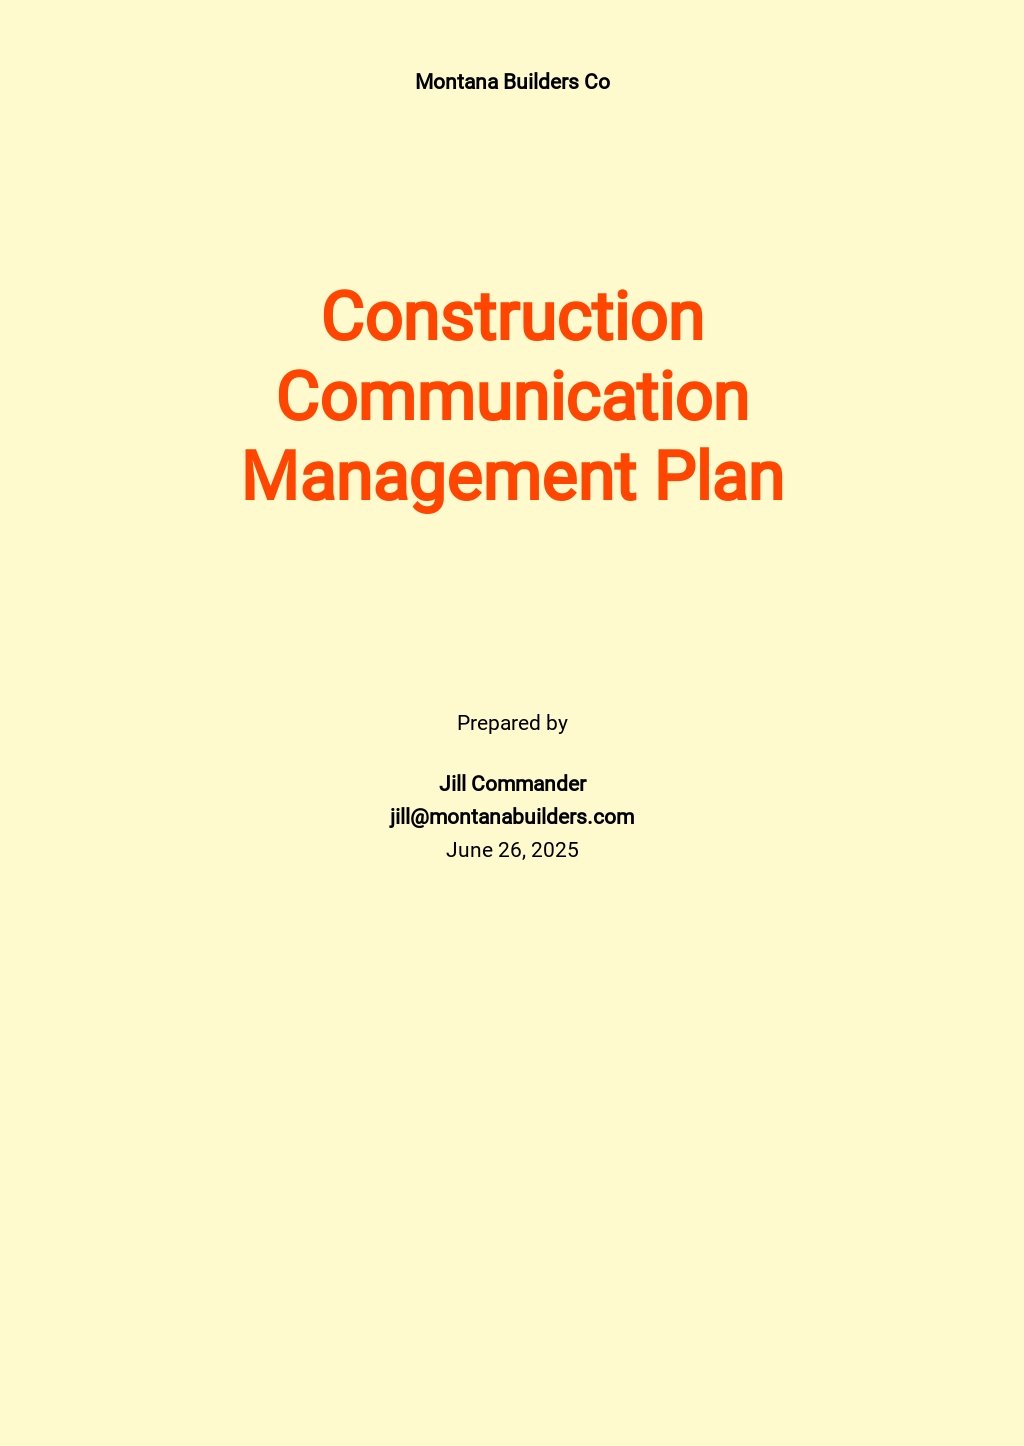 Construction Communication Management Plan Template.jpe